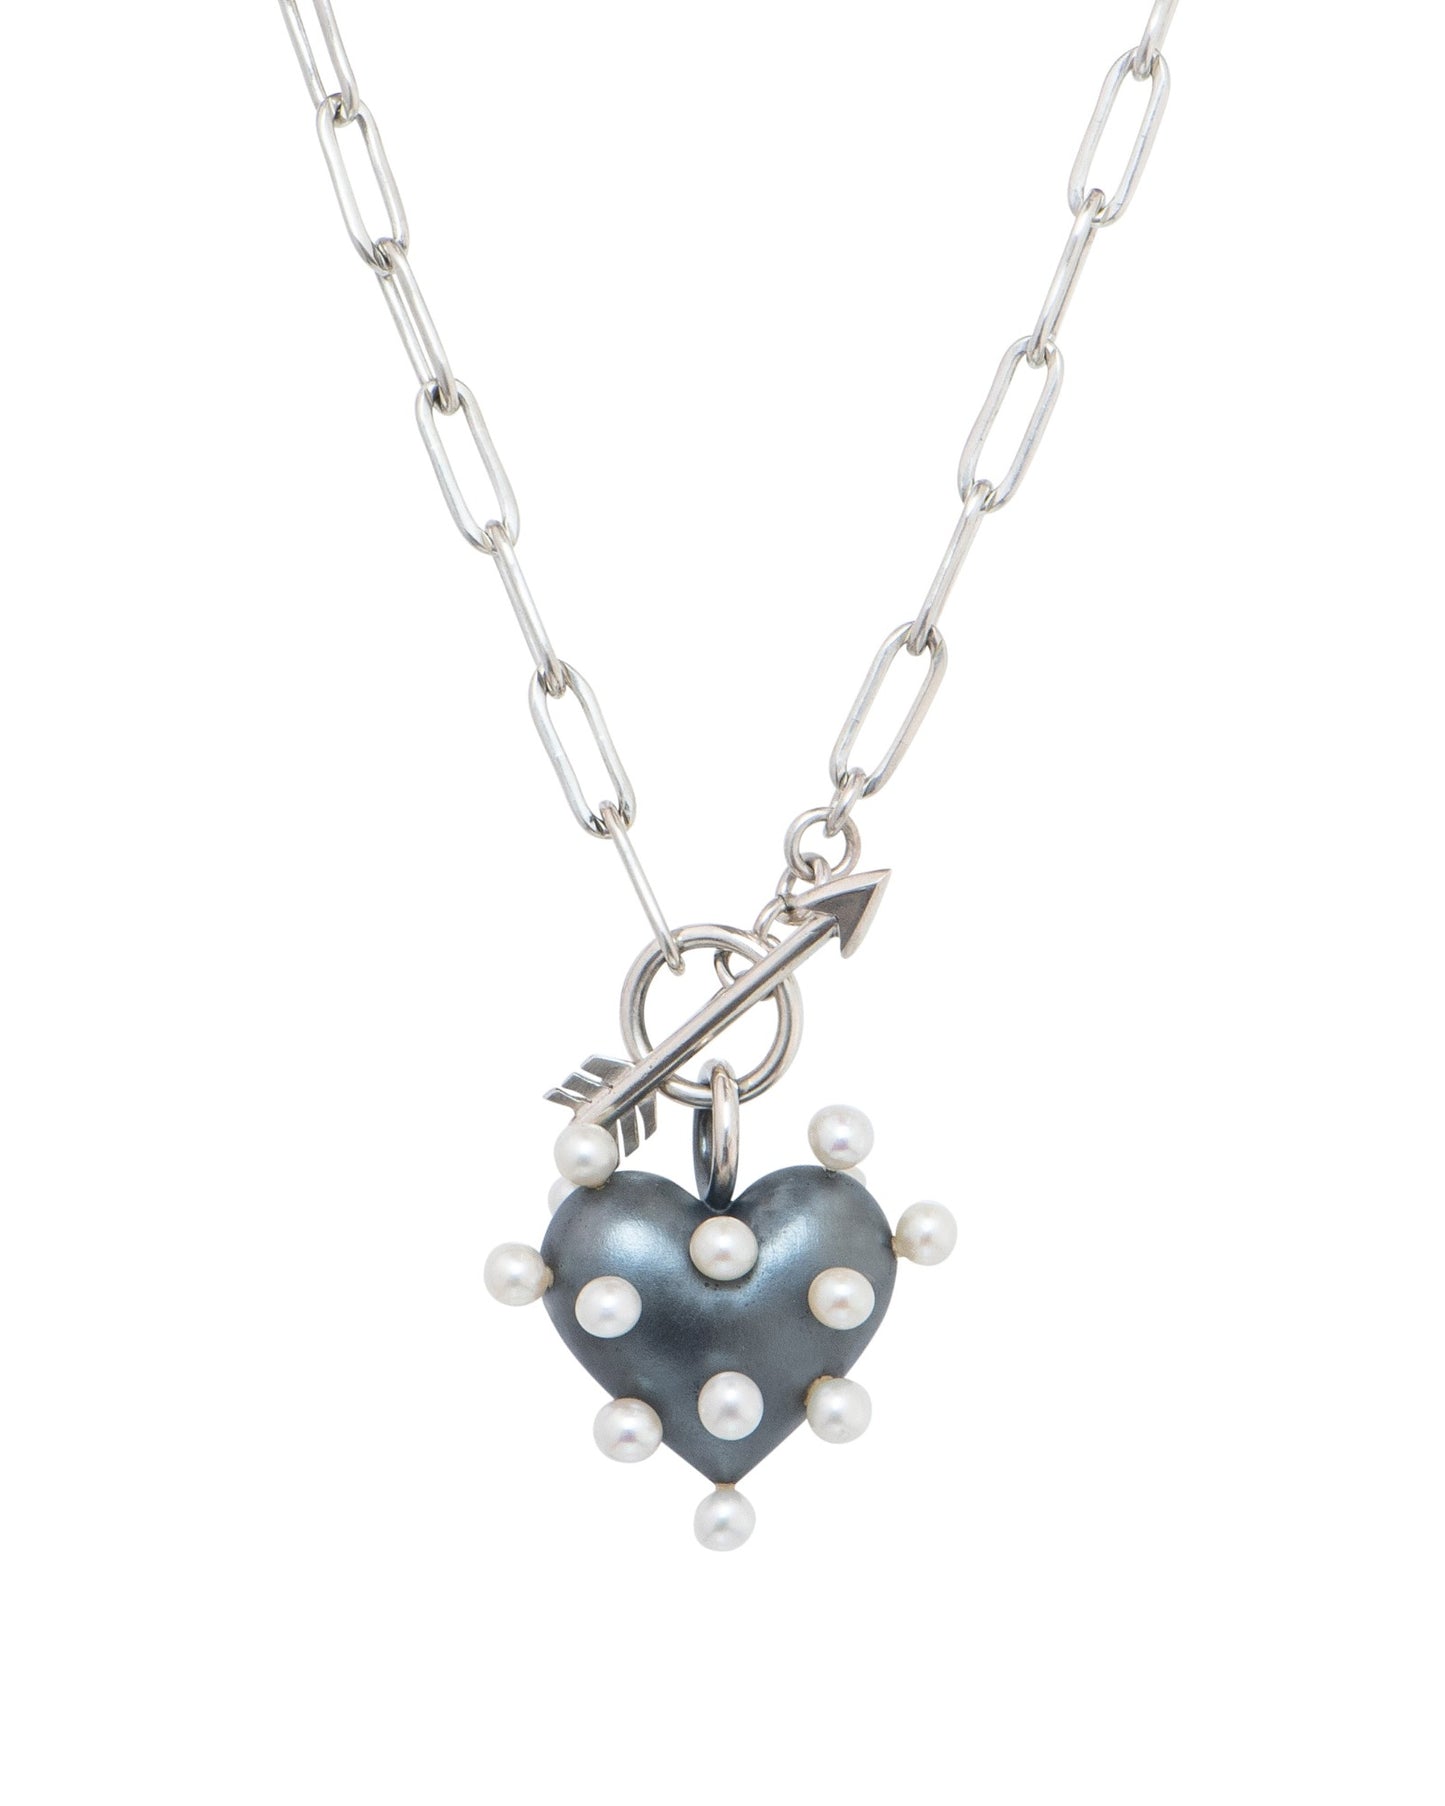 Pin Cushion Heart Necklace